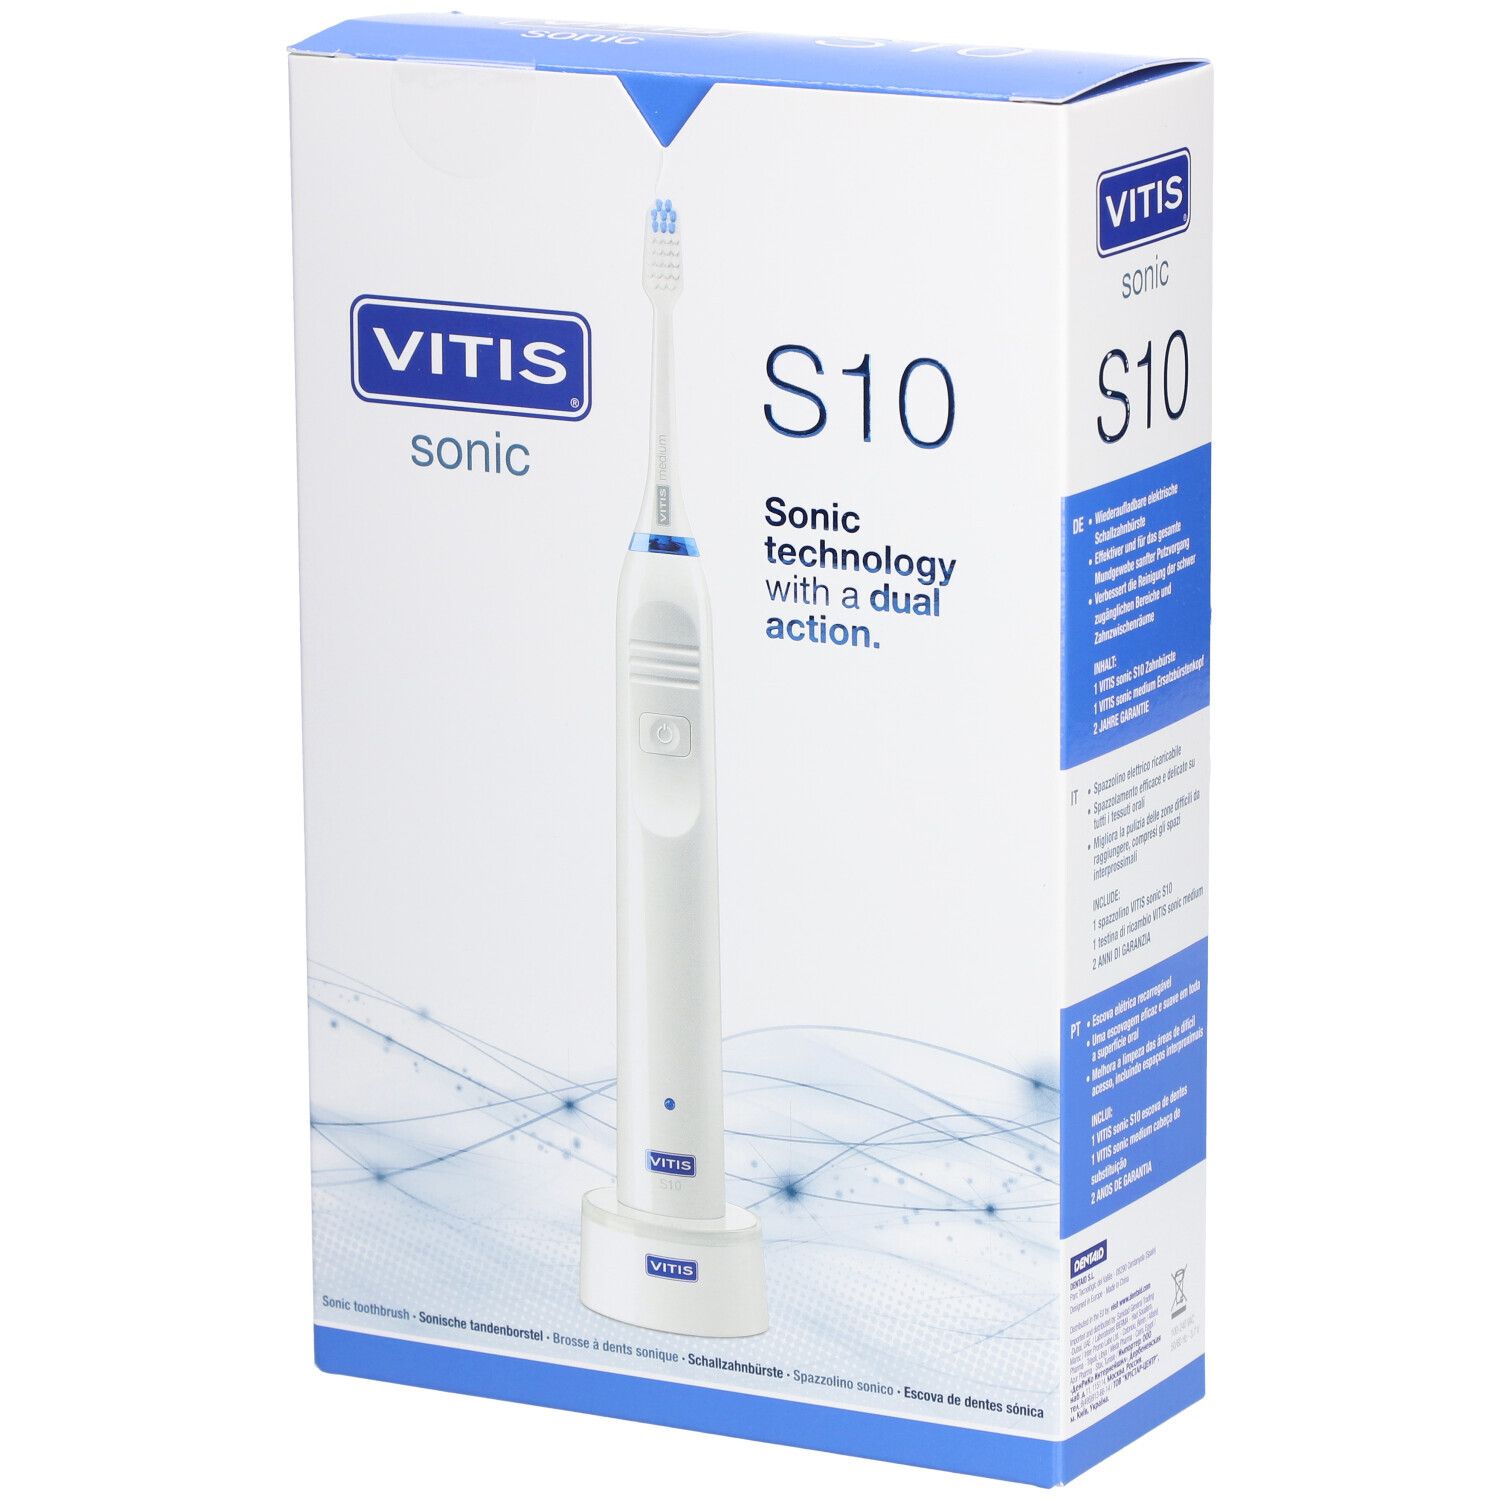 VITIS sonic S10 Schallzahnbürste